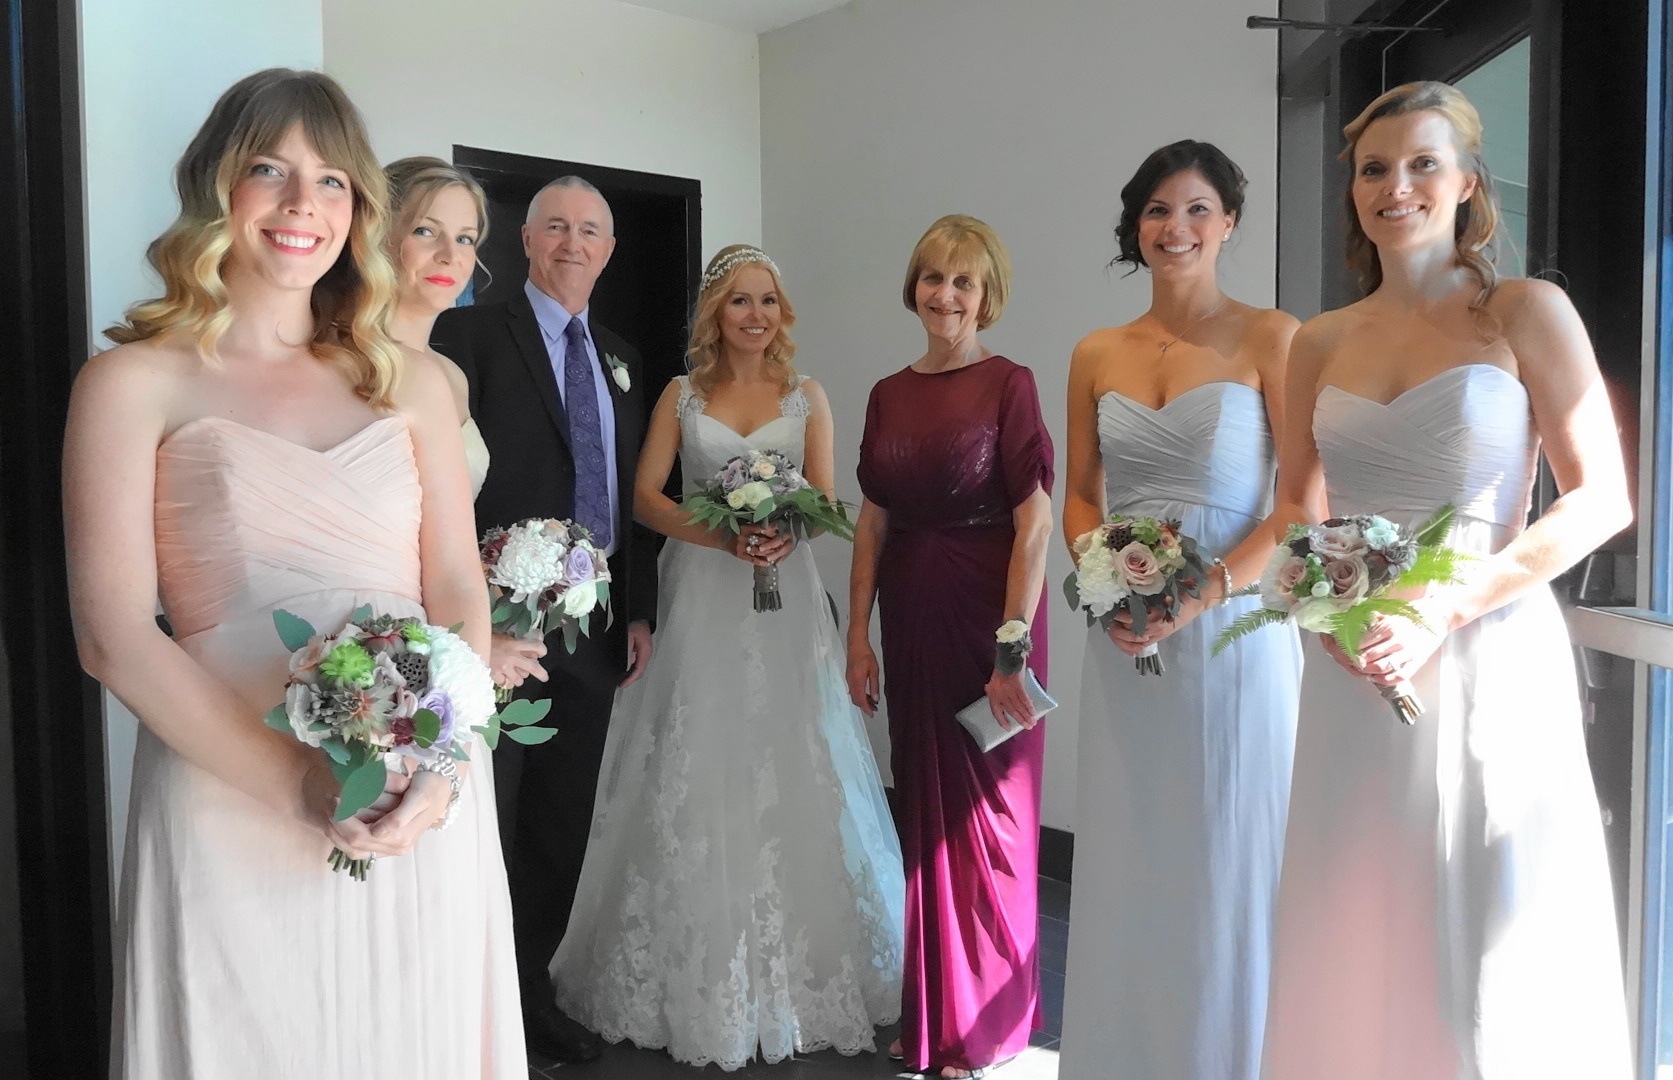 https://www.ottawaweddingmagazine.com/wp-content/uploads/2013/12/before-the-wedding.jpg